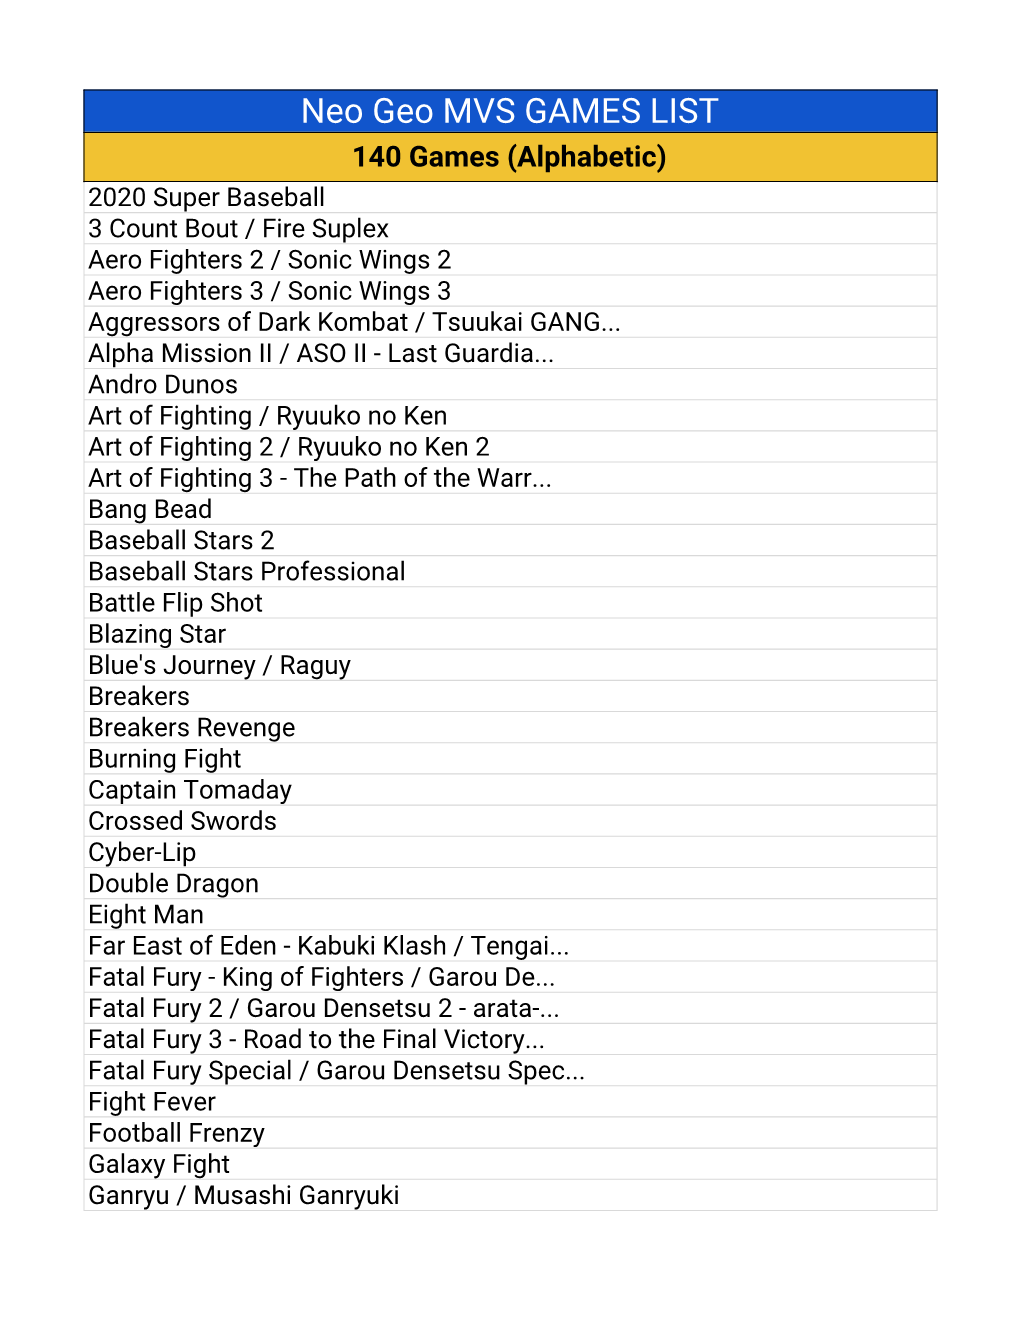 Neo Geo MVS Game List